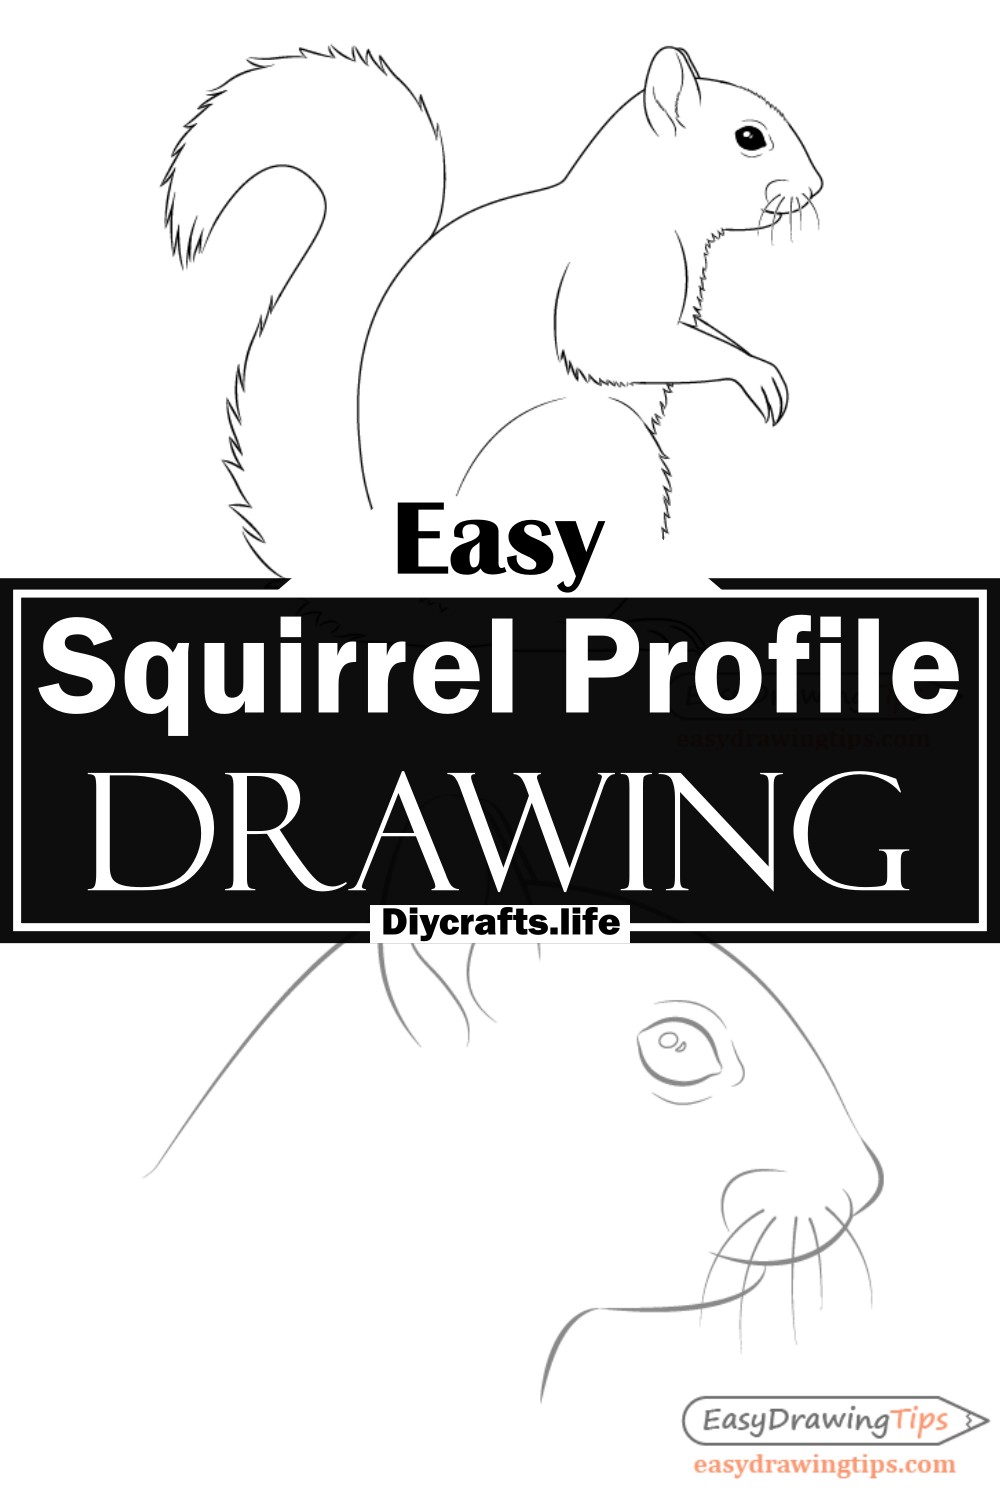 Squirrel Profile Drawing